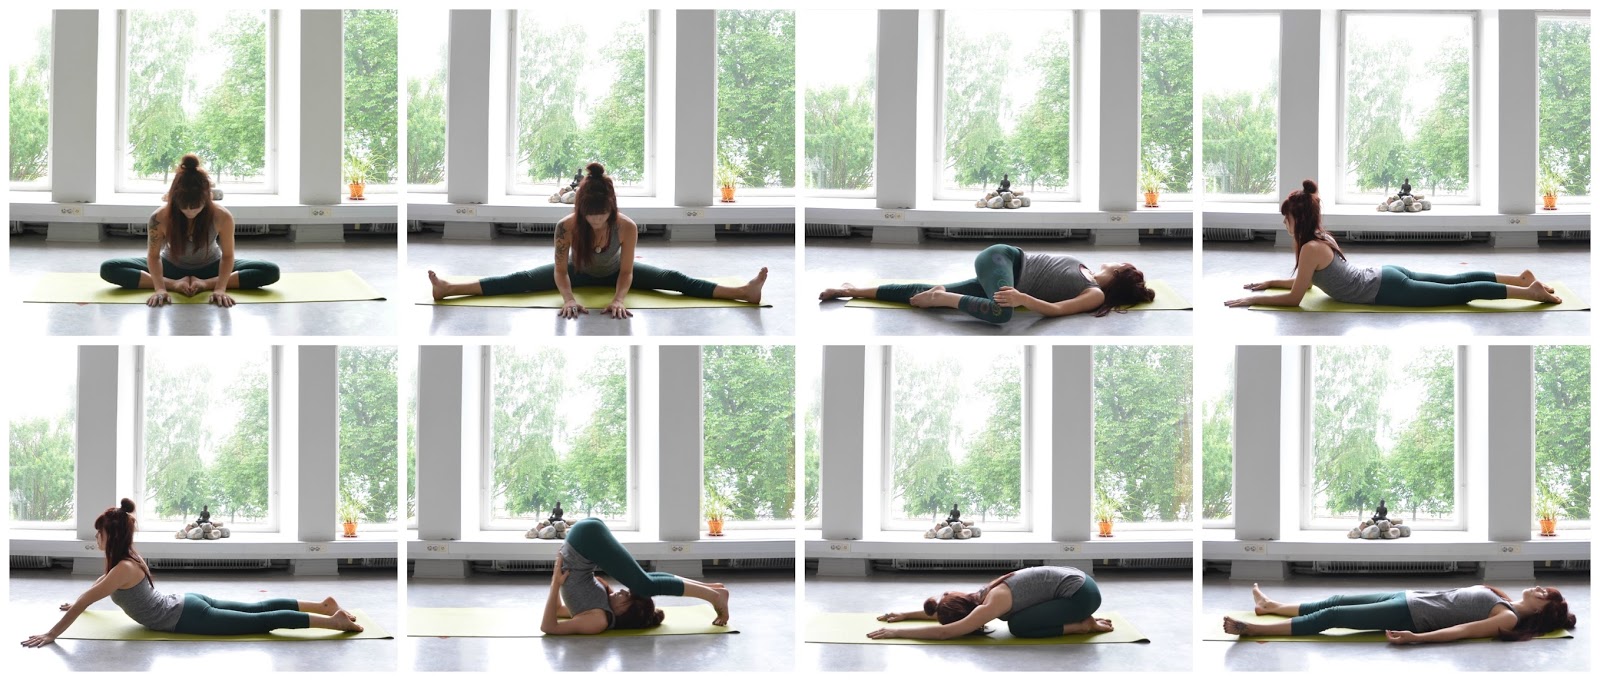 sacral chakra — Kemetic Yoga — The Laya Center - Afrivedic Wellness